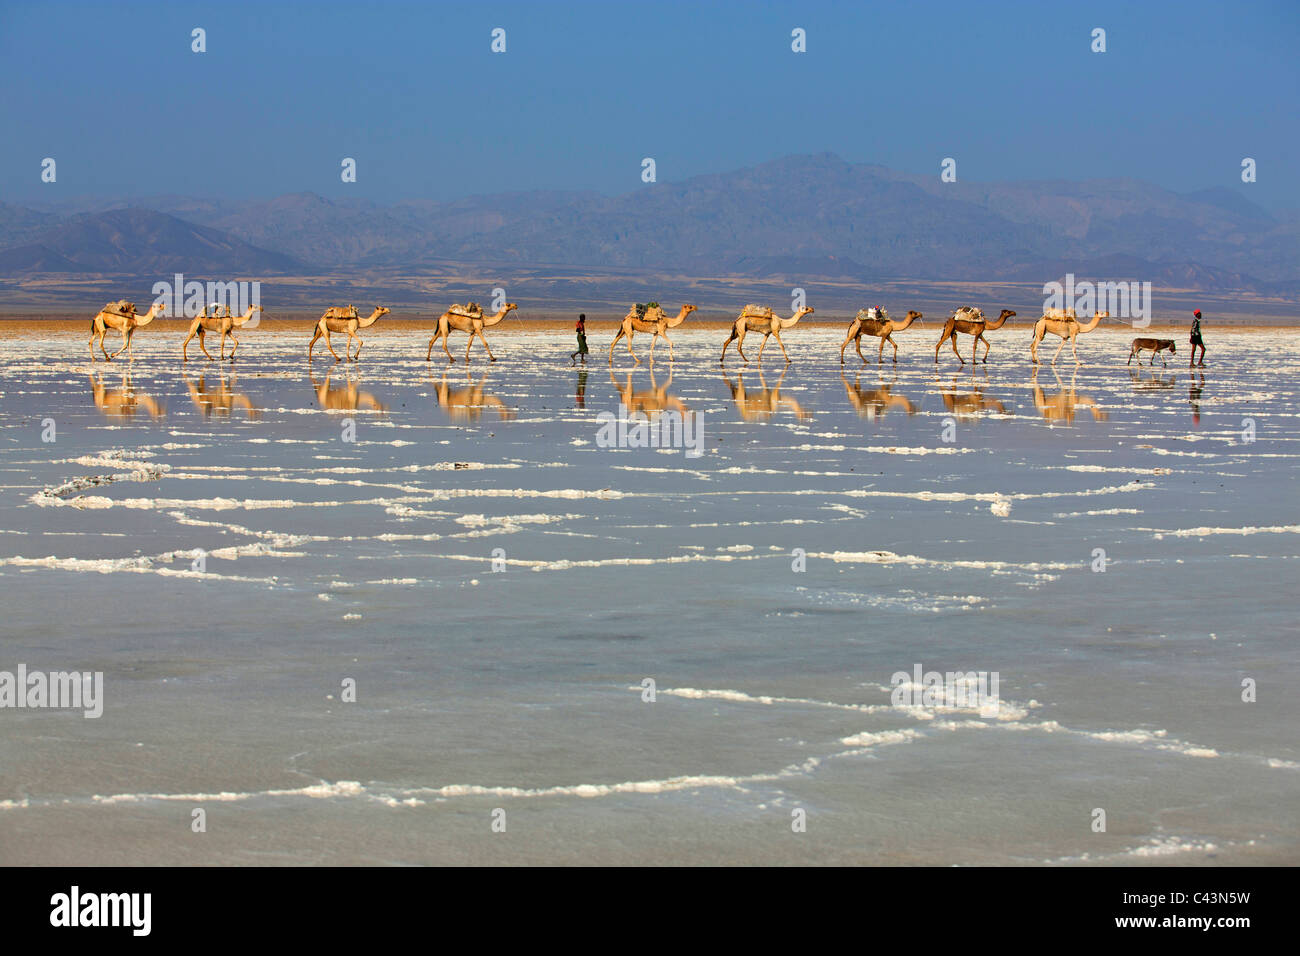 Ahmed Ela, Africa, Ethiopia, Afar region, Afgar, Danakil, desert, salt lake, salt, camels, dromedaries, caravan, salt caravan, w Stock Photo